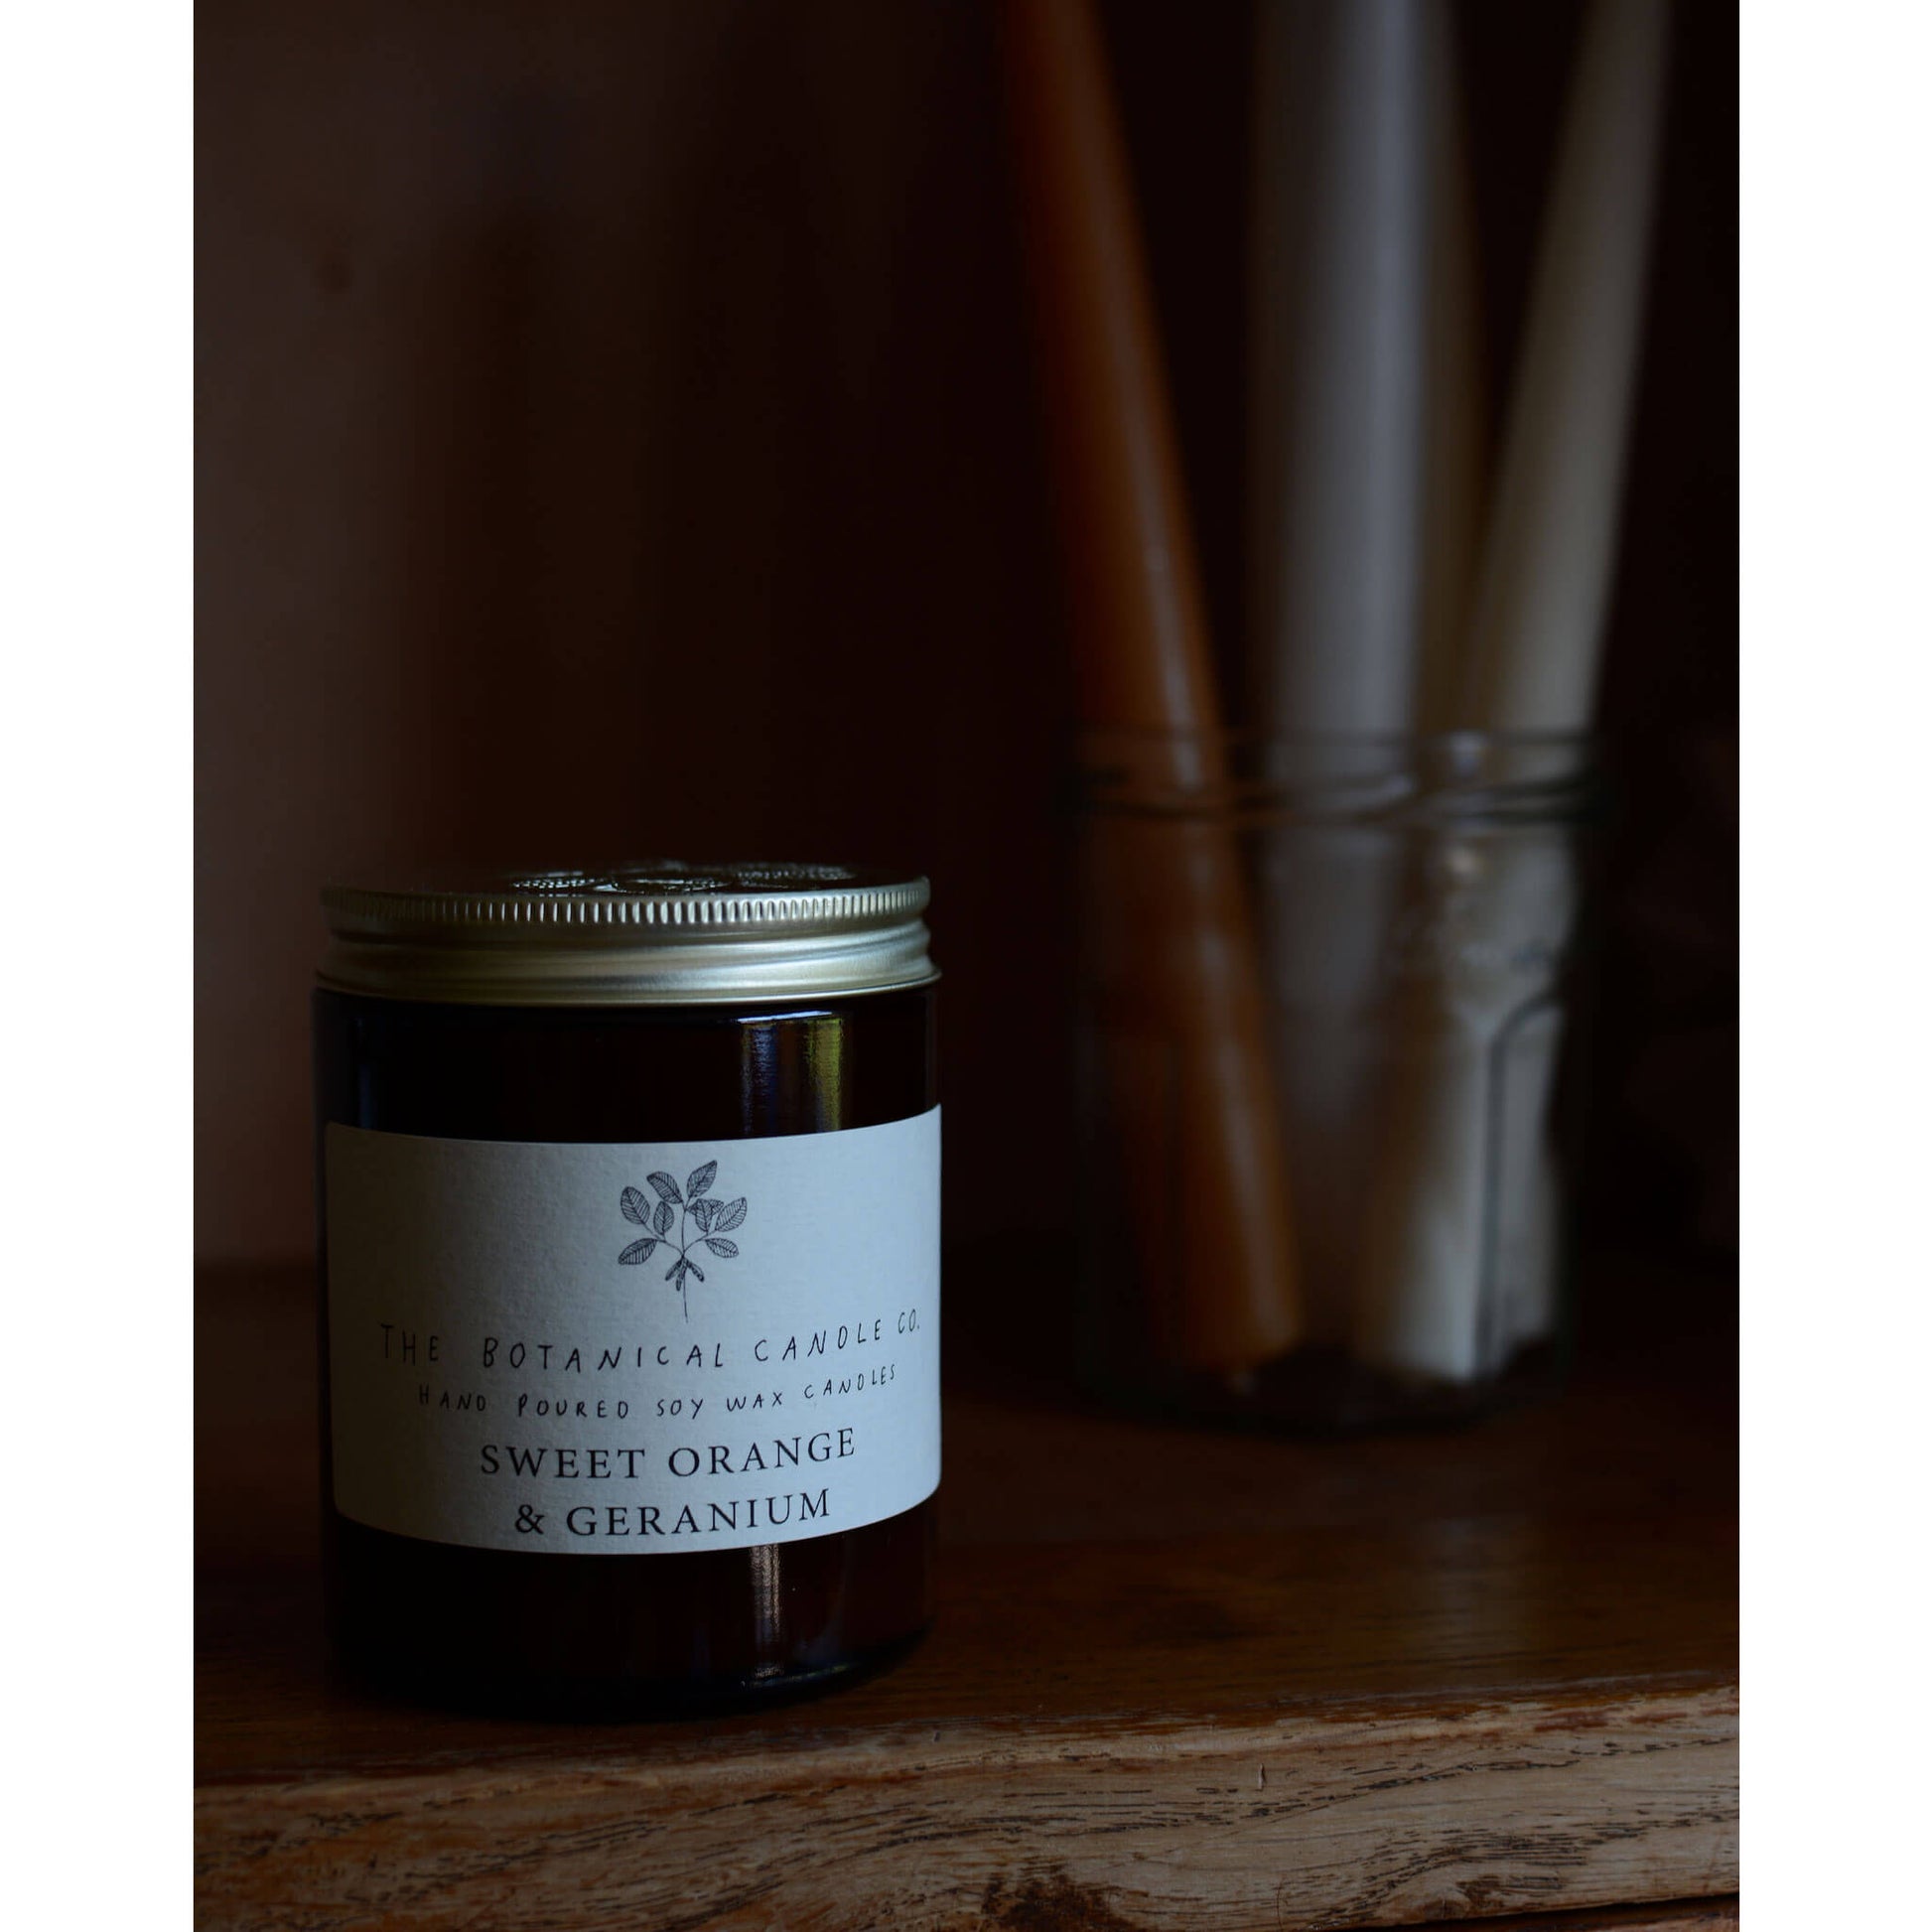 Sweet Orange and Geranium soy wax candle by The Botanical Candle Co. Medium 180ml.